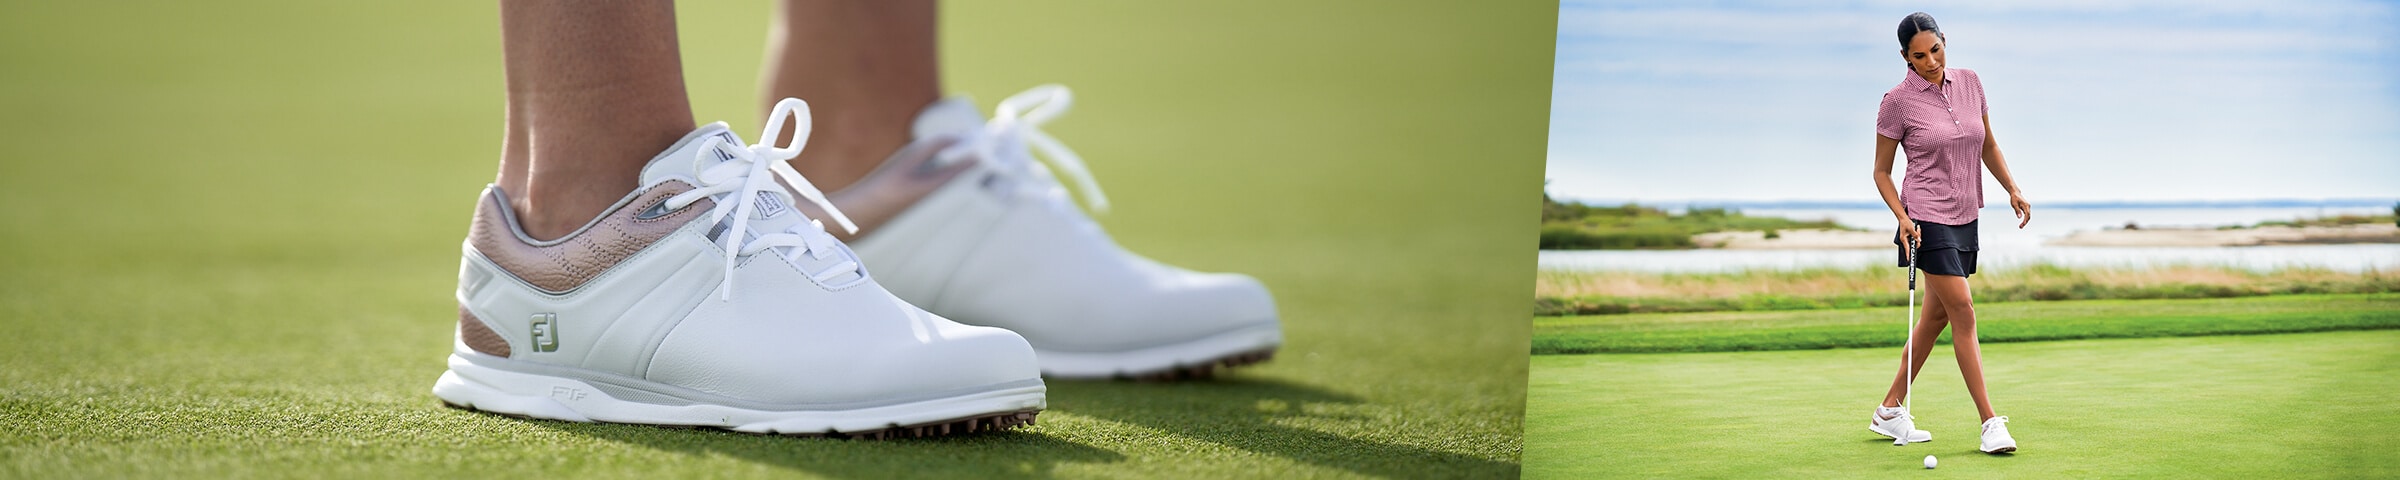 FootJoy Womens Spikeless Golf Shoes